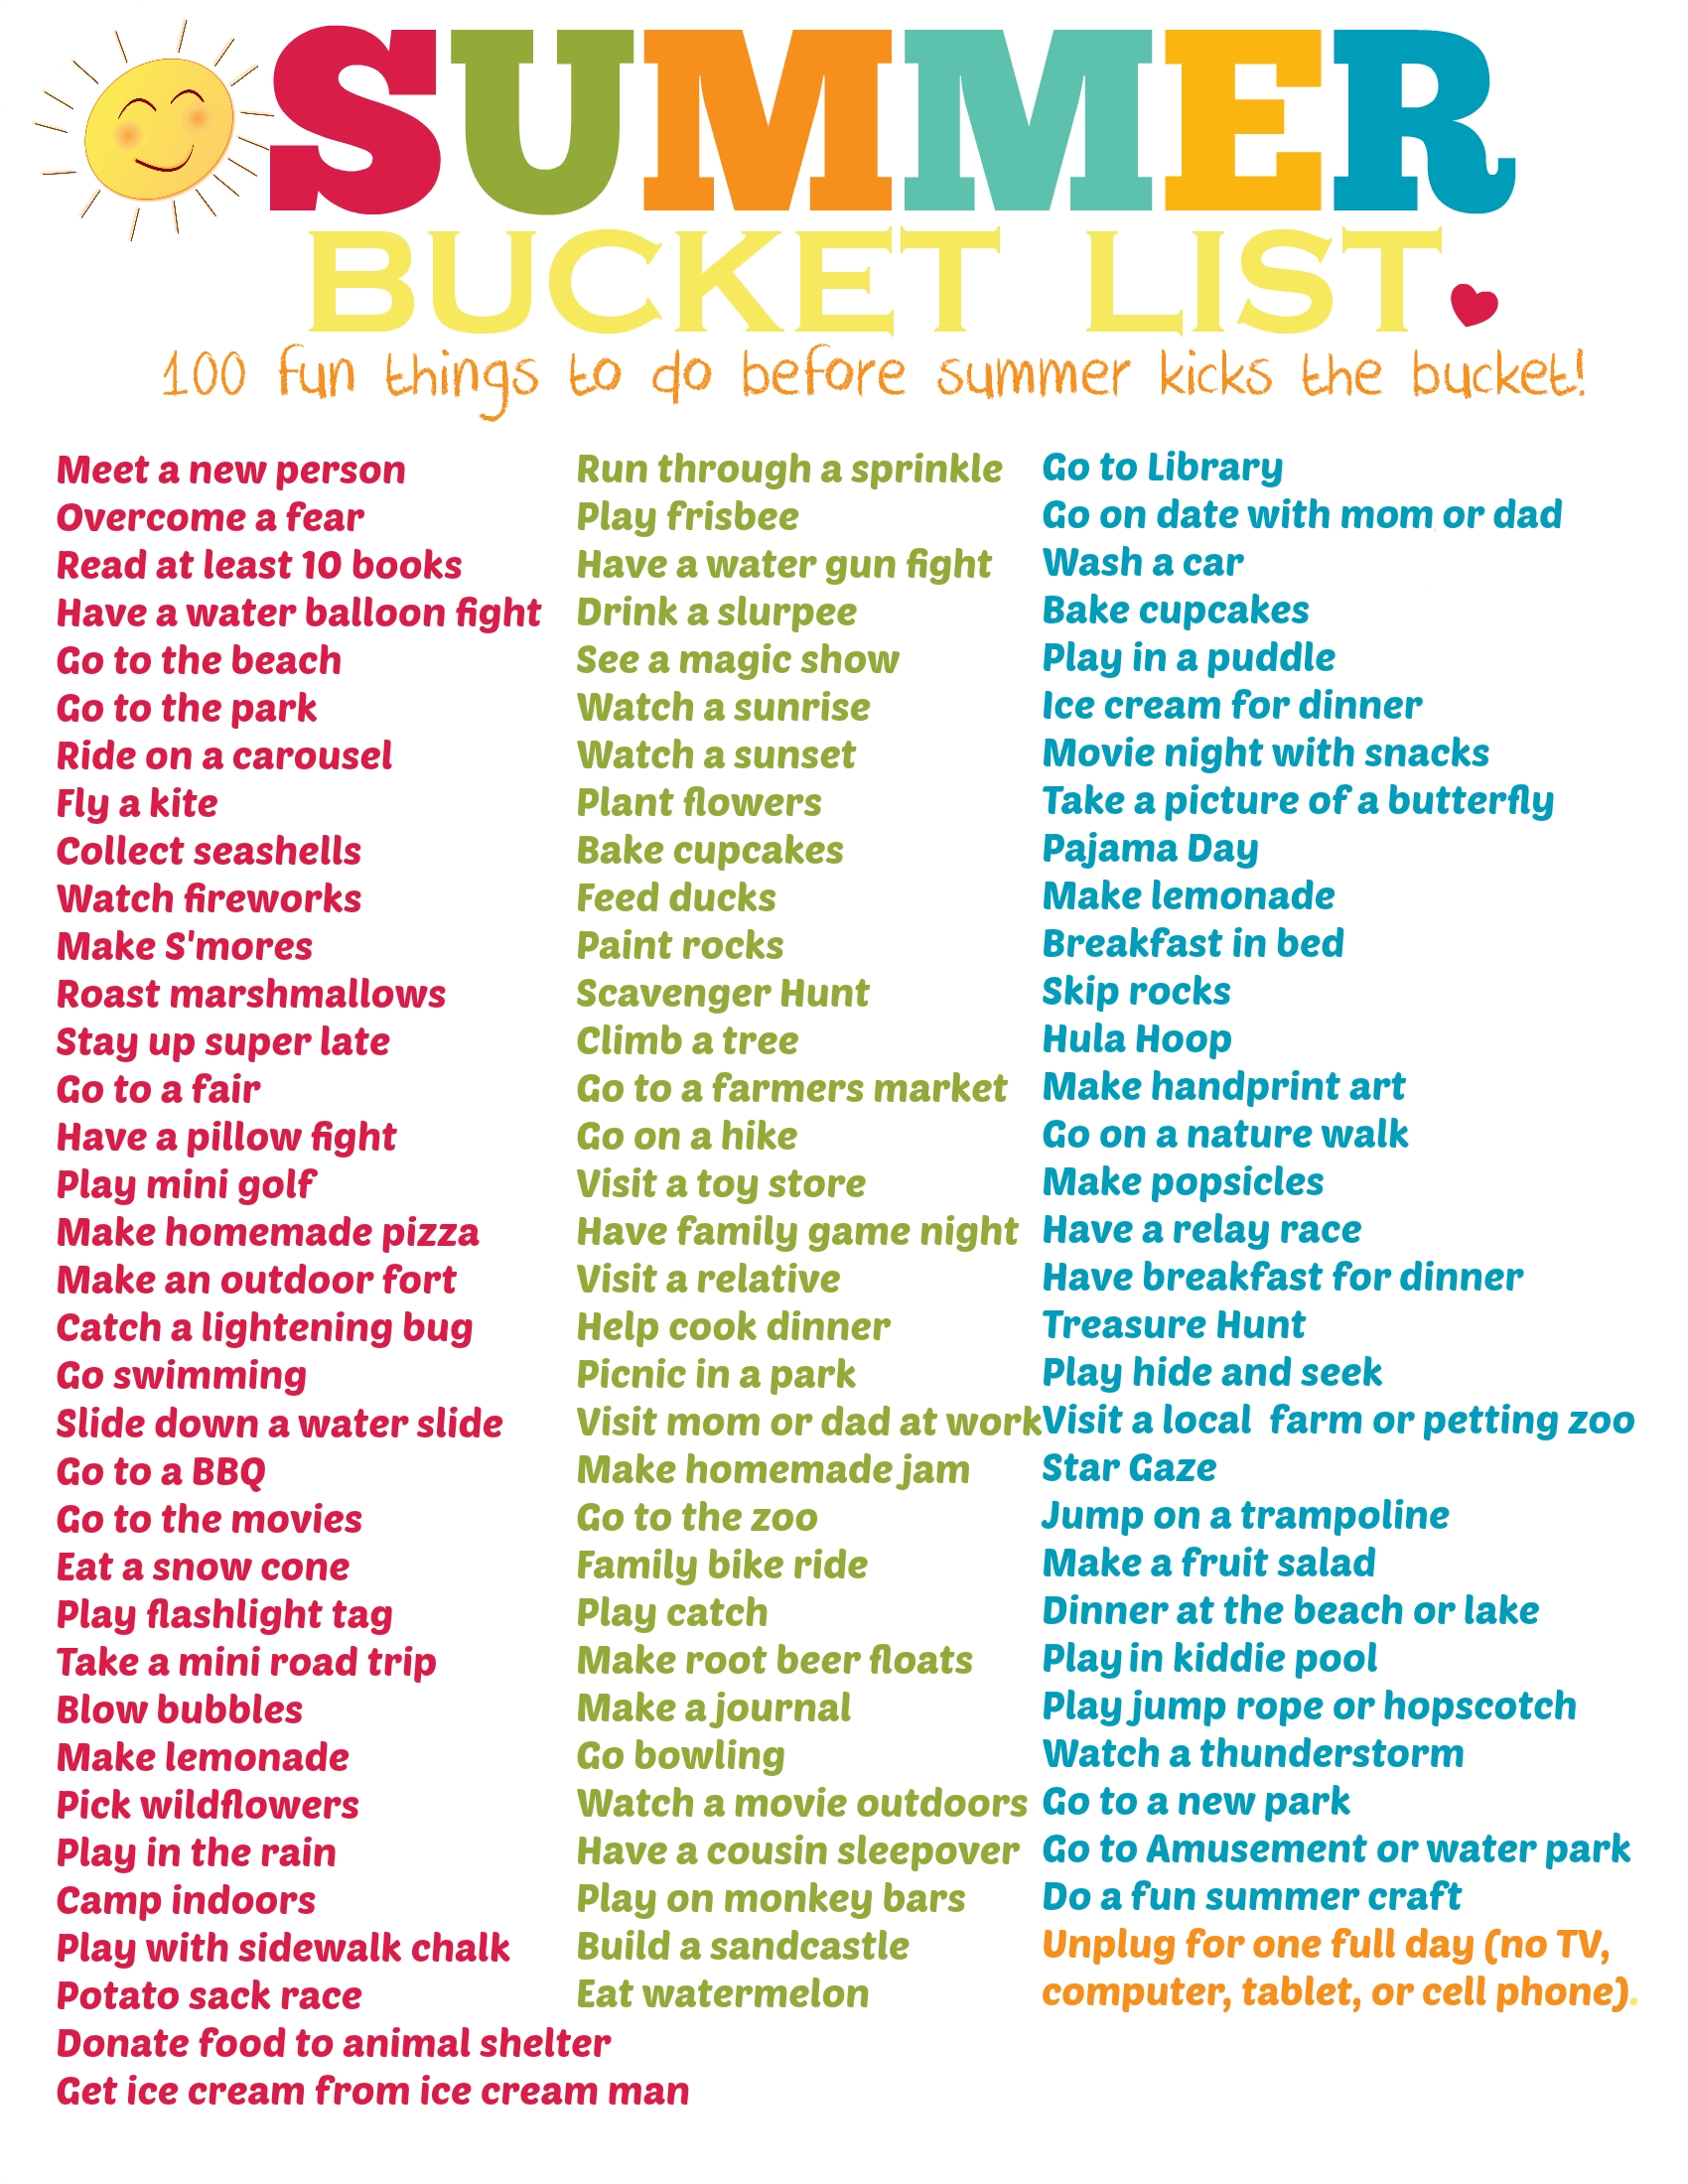 10 Amazing Summer Bucket List Ideas For Couples summer bucket list summer list summertime activities summer fun 1 2022